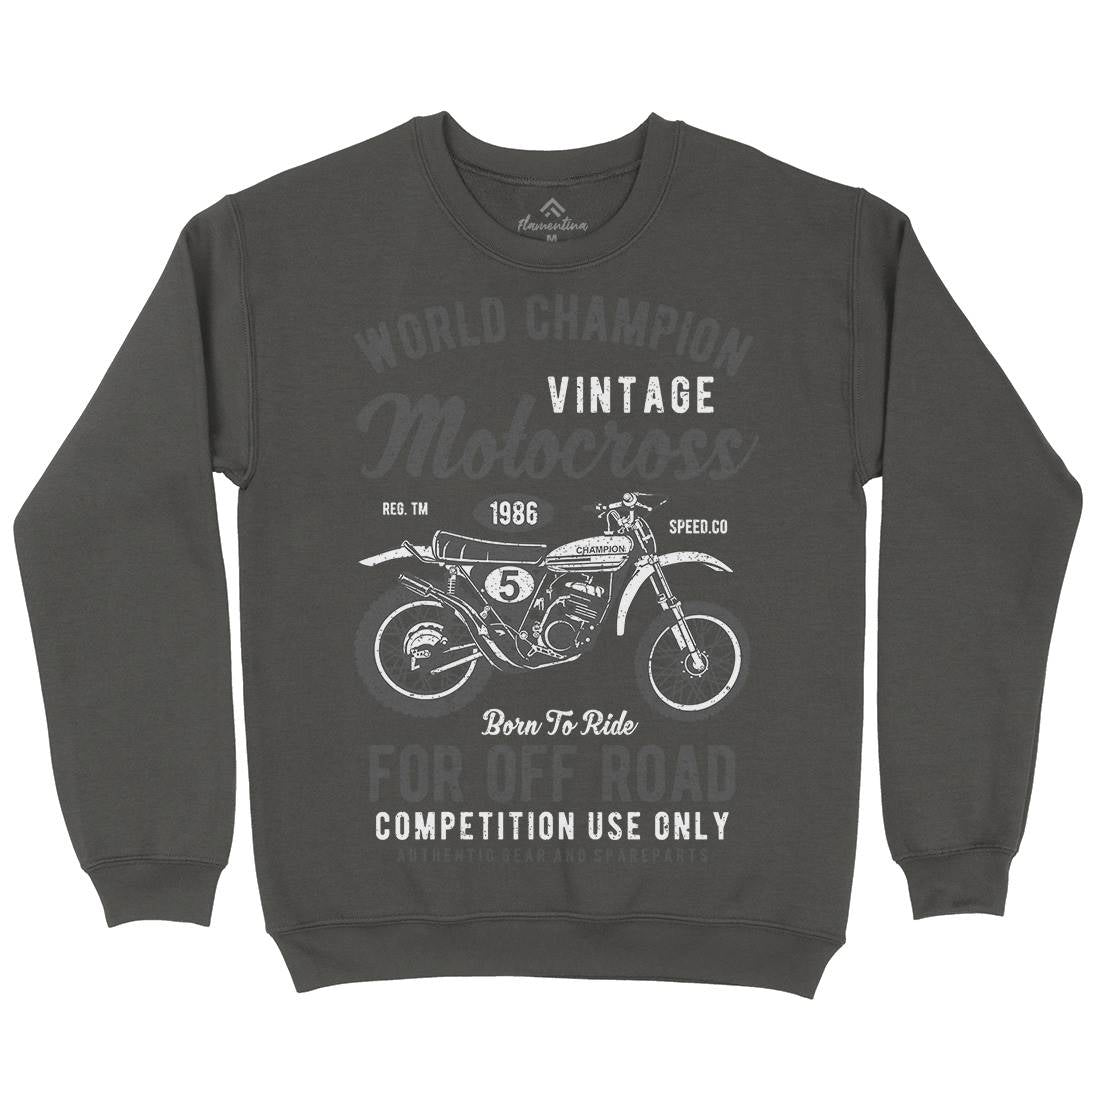 Vintage Motocross Mens Crew Neck Sweatshirt Motorcycles A785